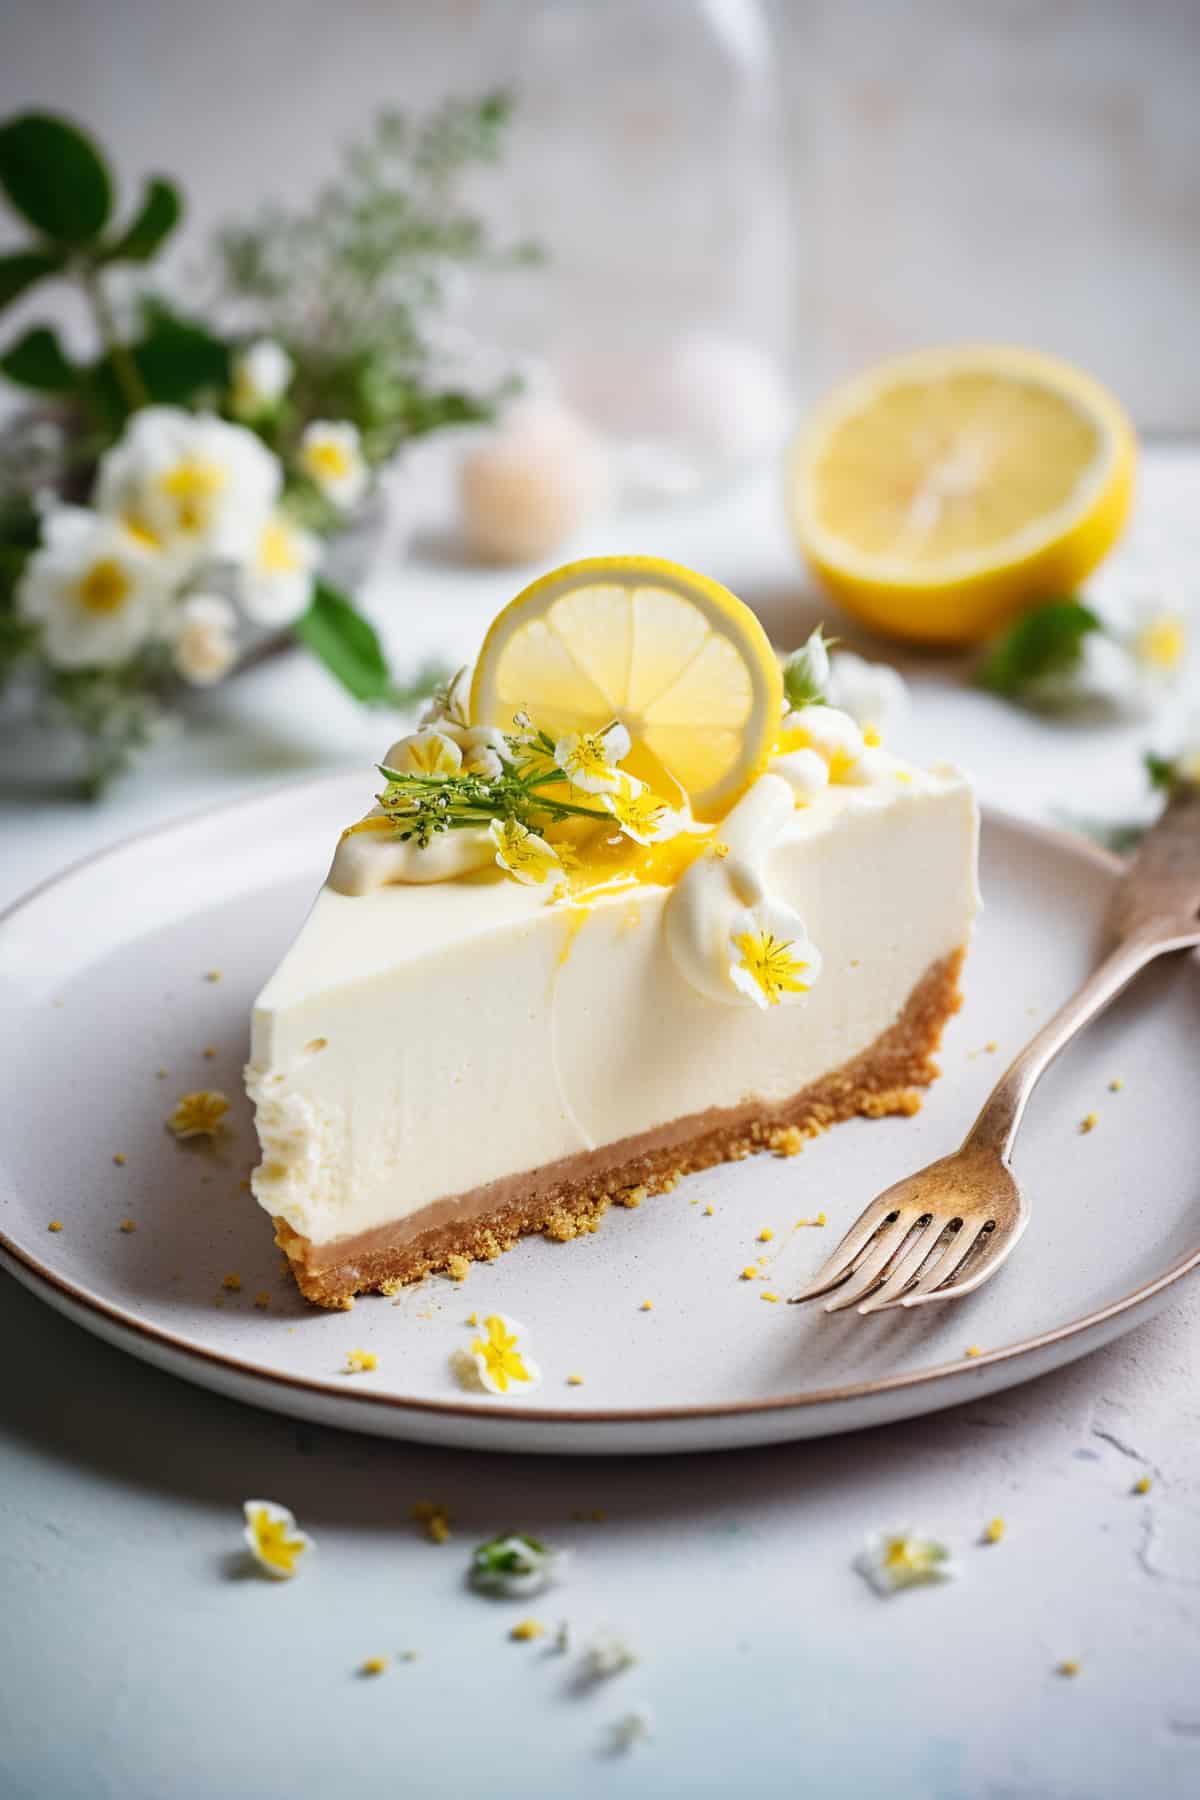 A slice of no bake lemon cheesecake on a white plate.